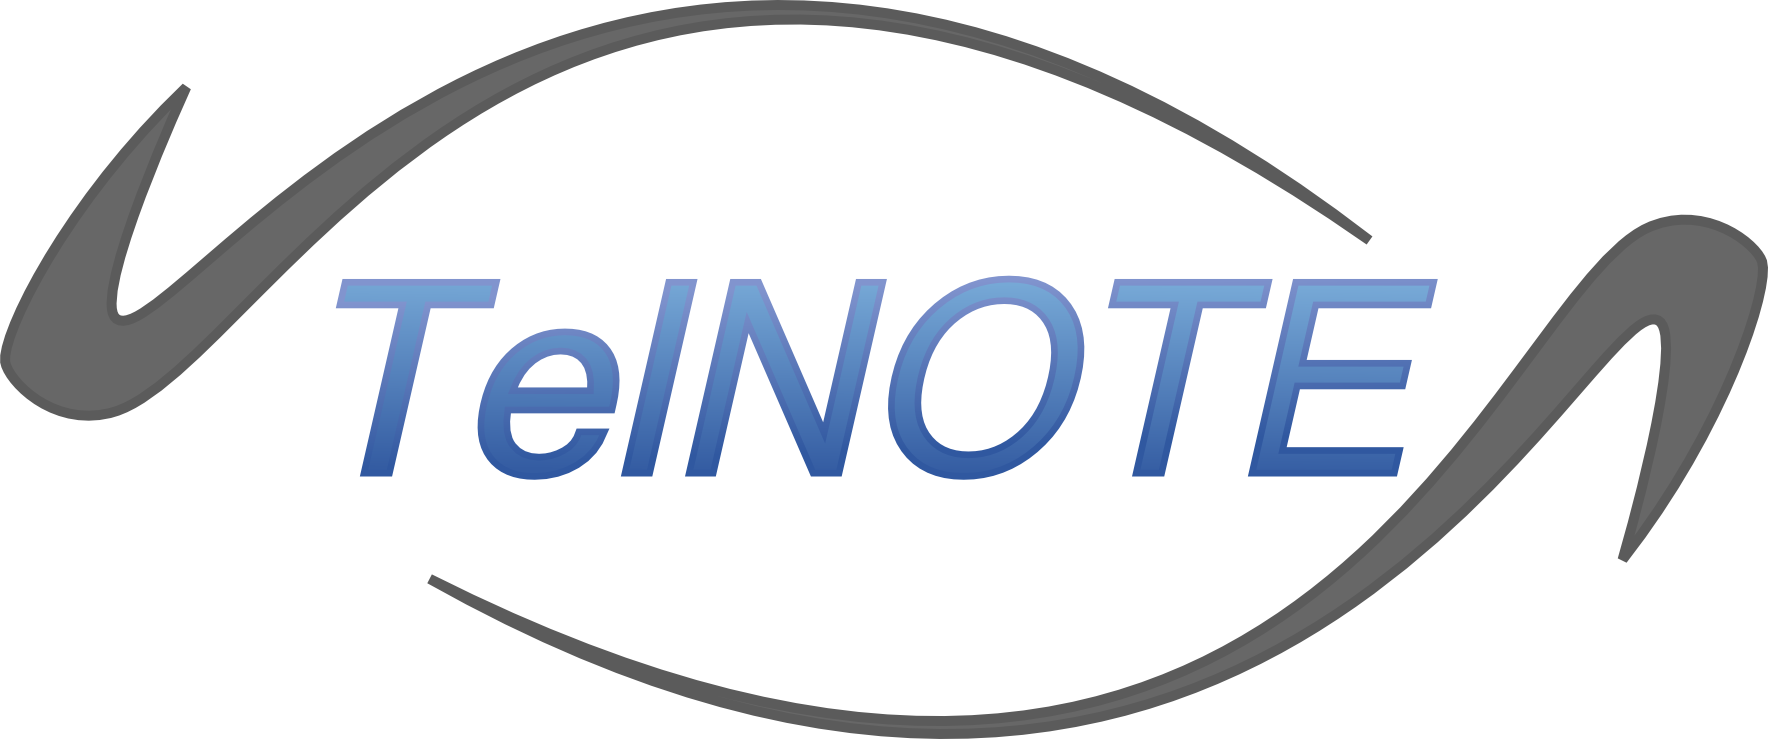 TelNOTE logo3